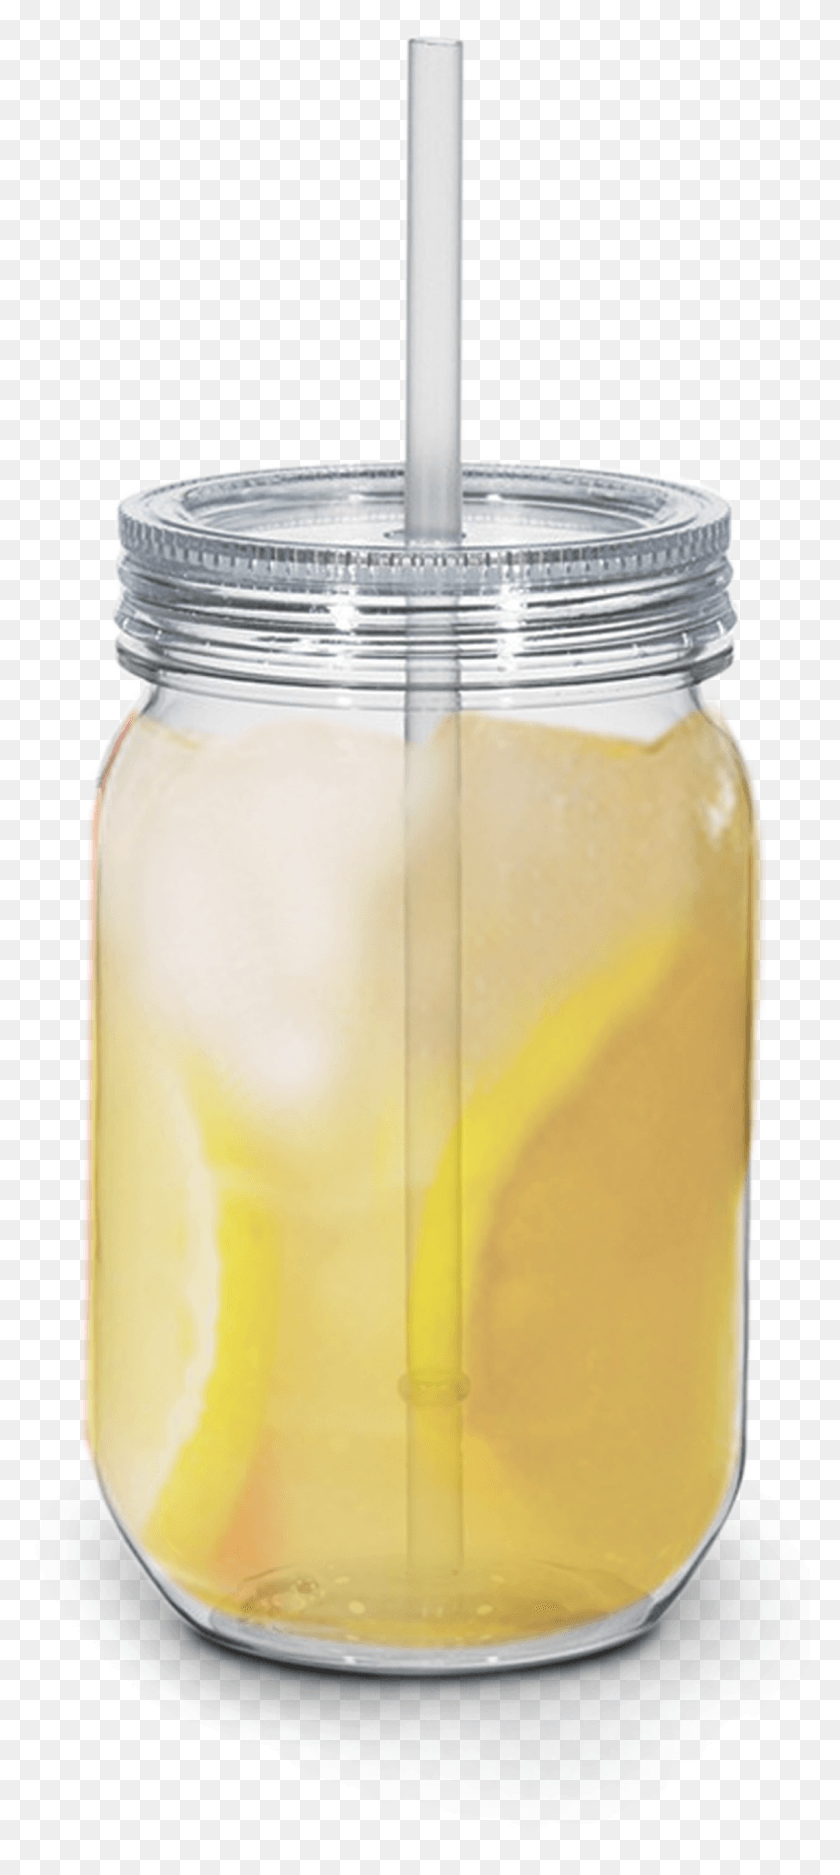 1165x2711 Banner Transparente Limonada Transparente Mason Jar Kombucha, Leche, Bebida, Bebida Hd Png